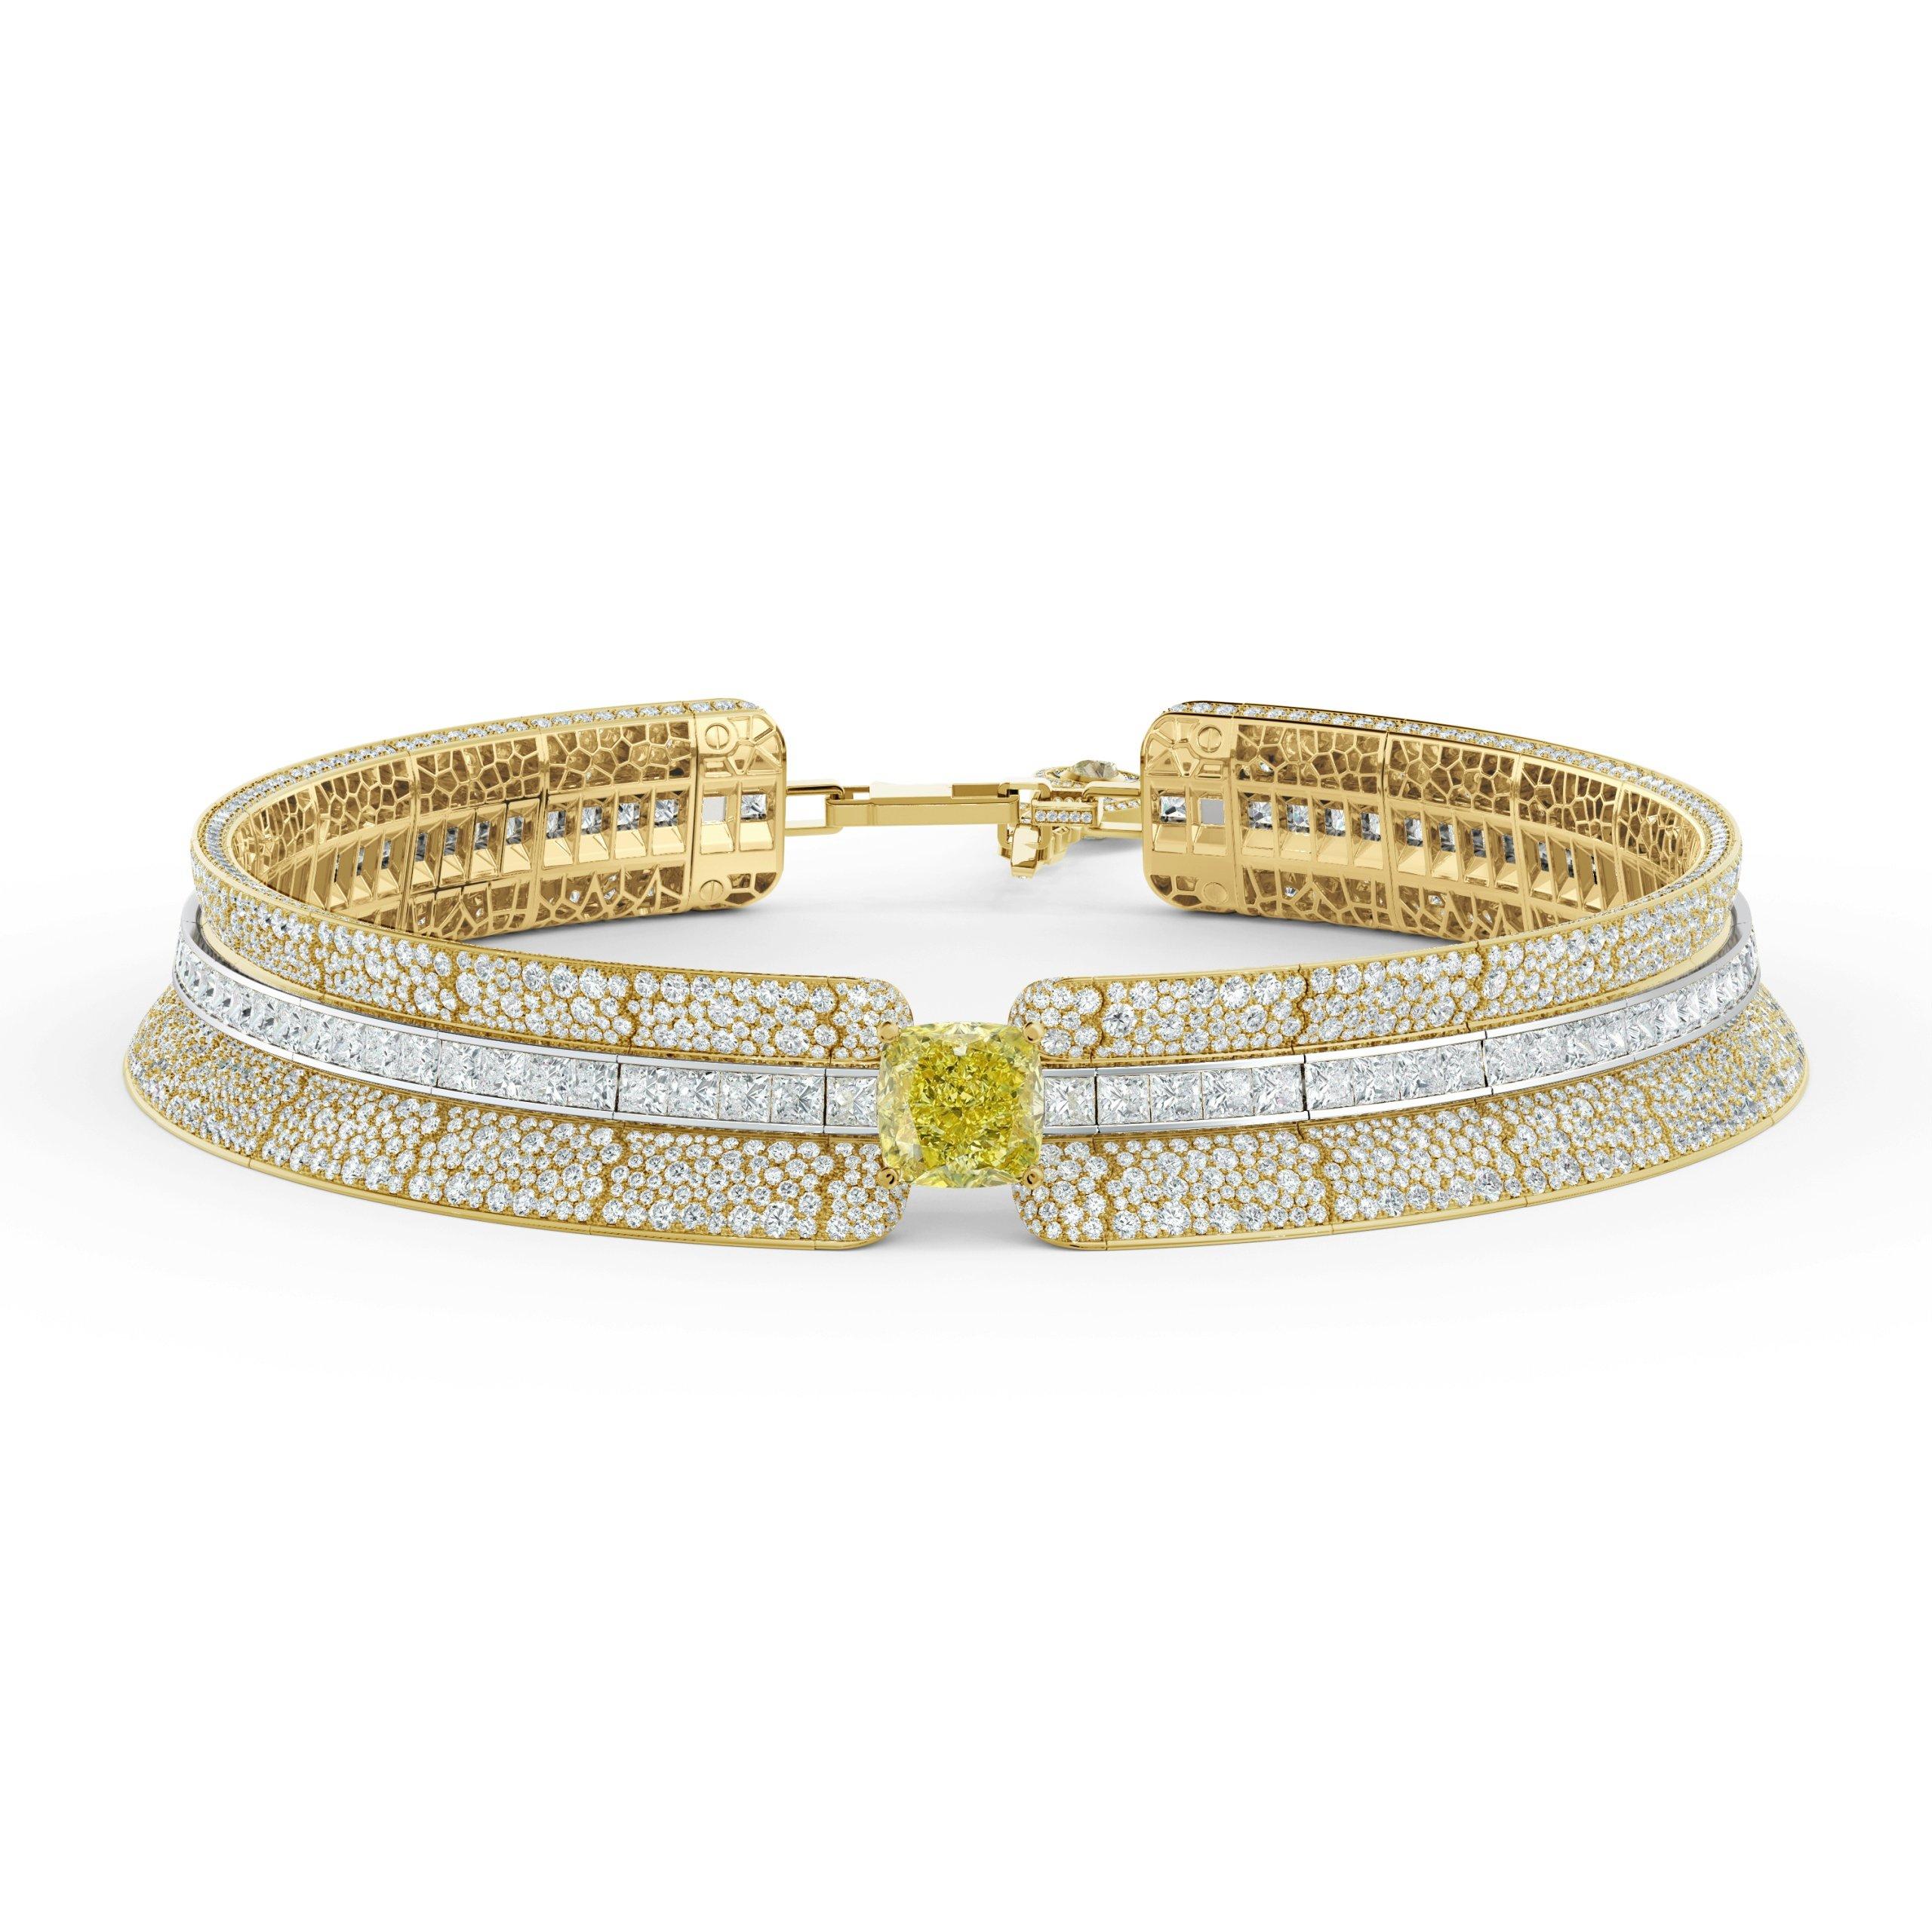 Collier grand pendentif LV, or jaune et diamants - Catégories de luxe, Joaillerie Q93848